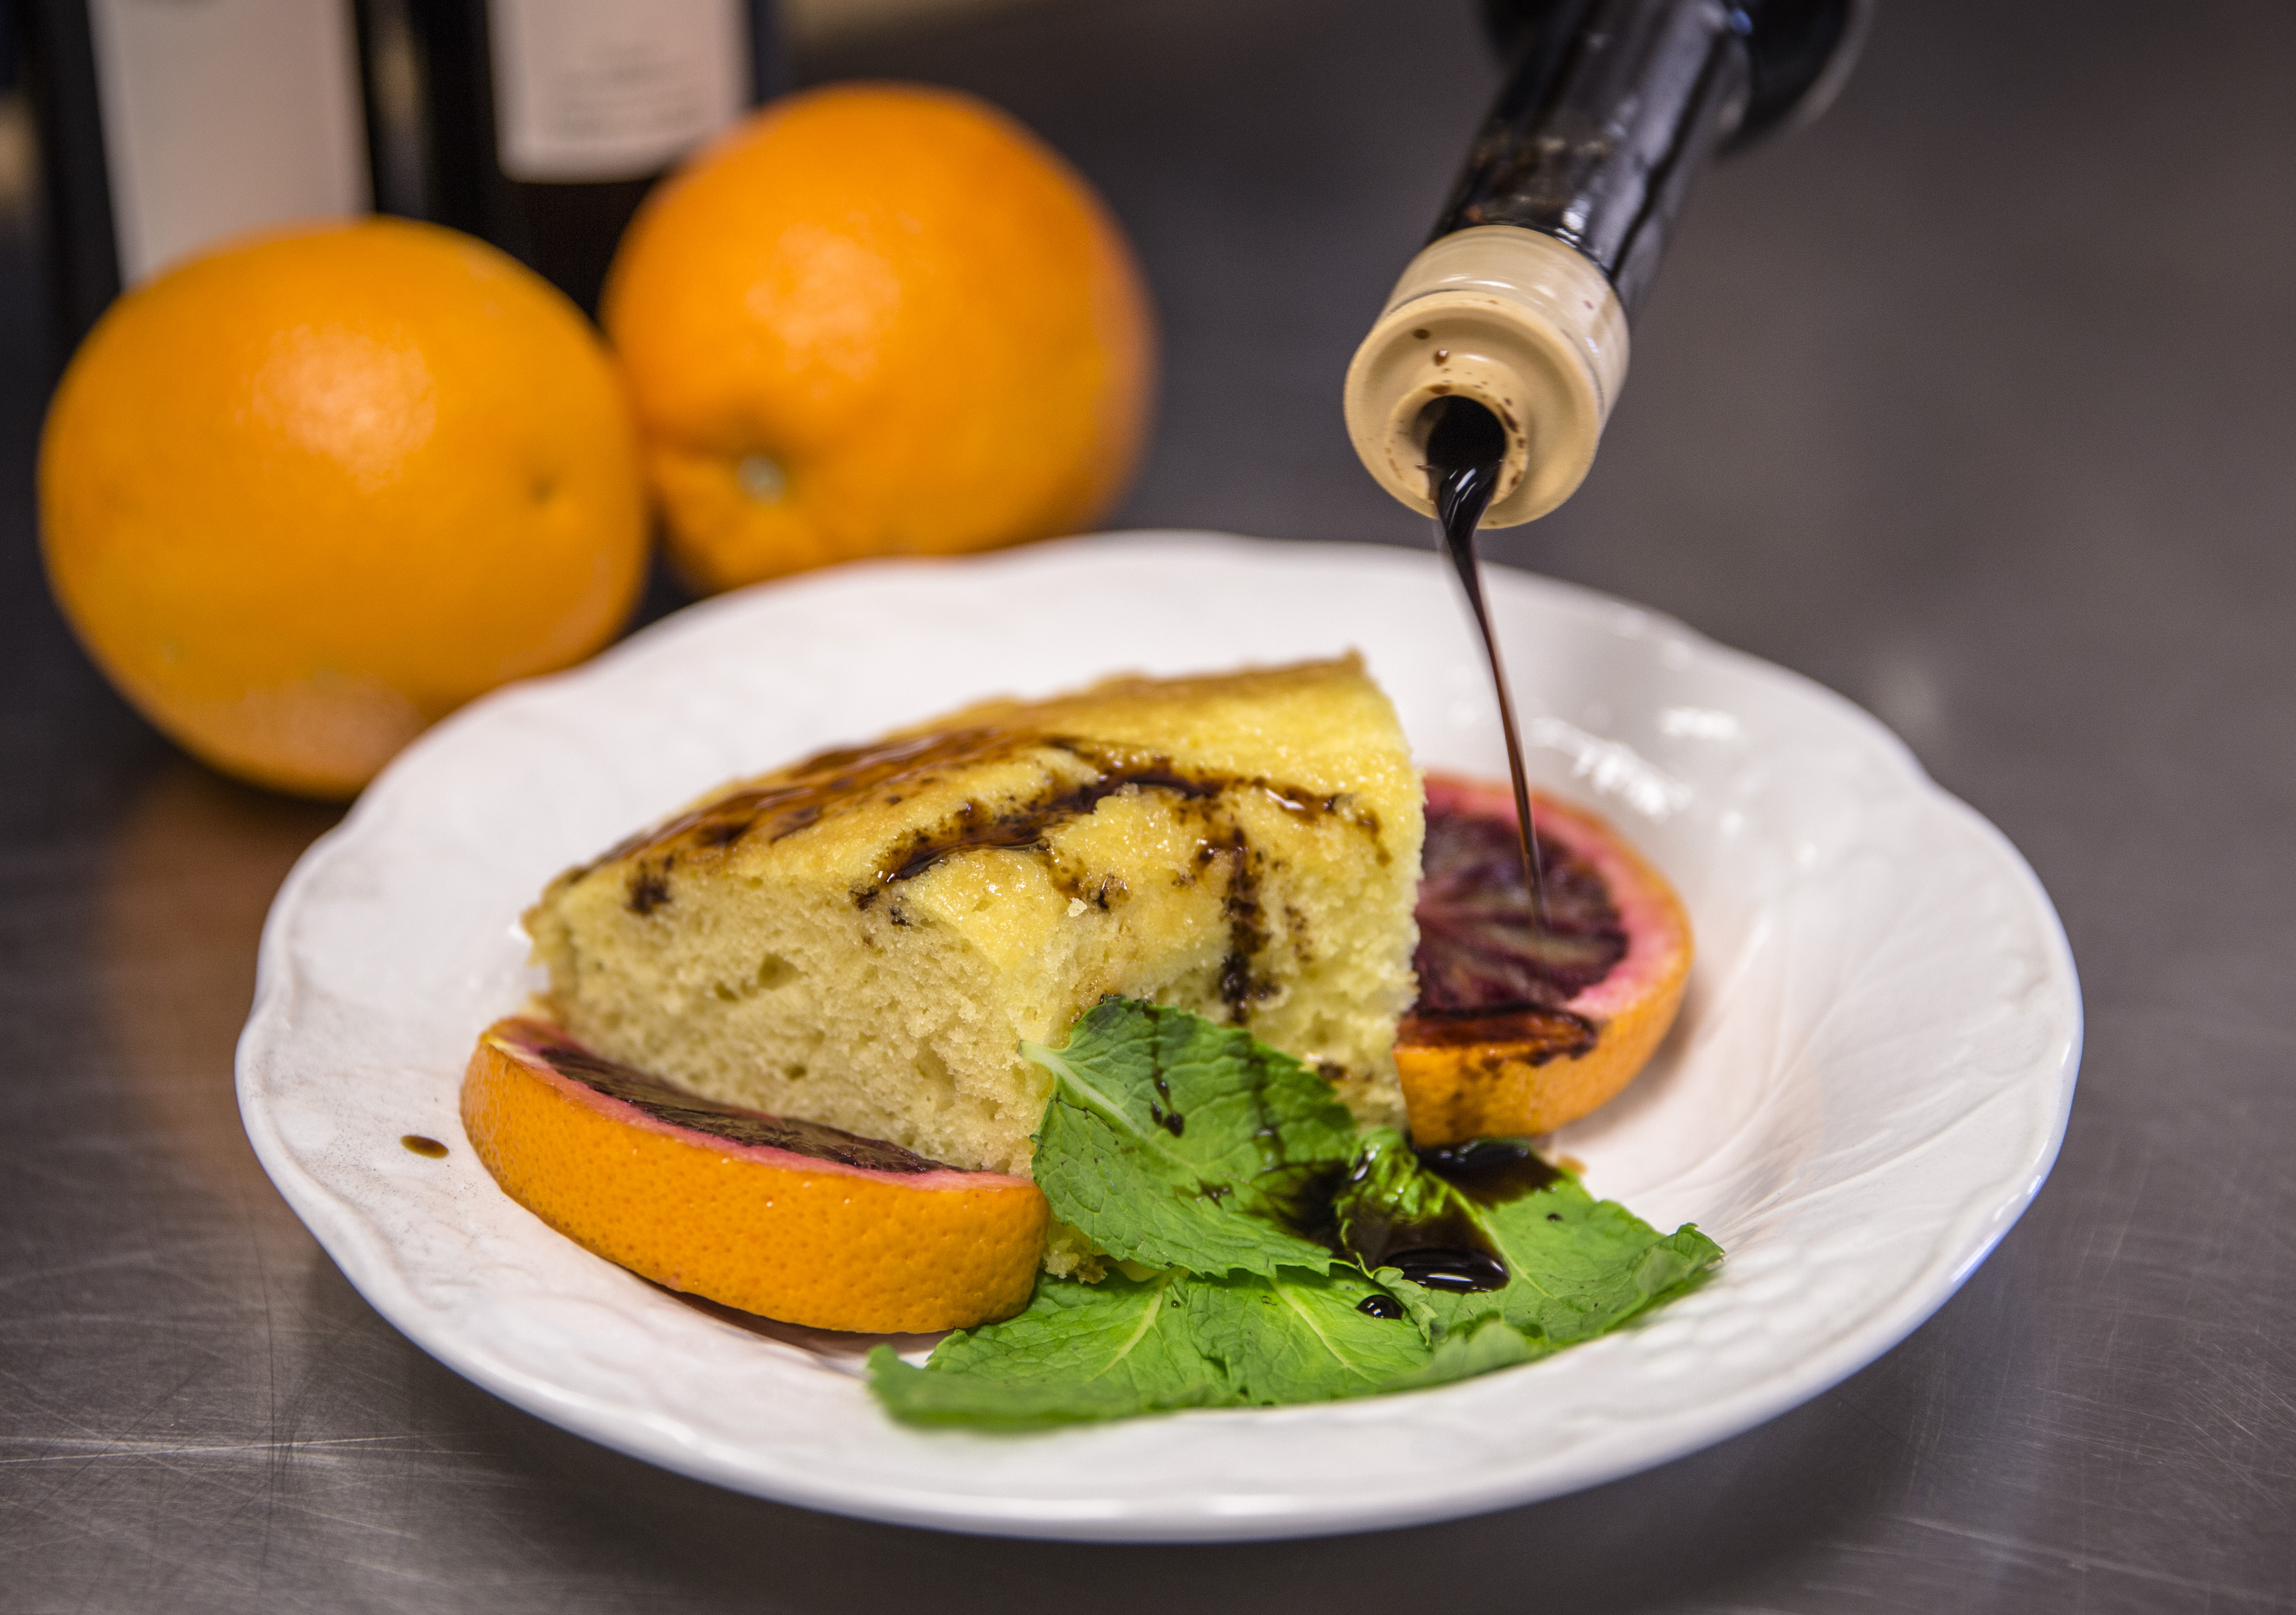 Blood orange olive oil cake from Chef Debbi Dubbs